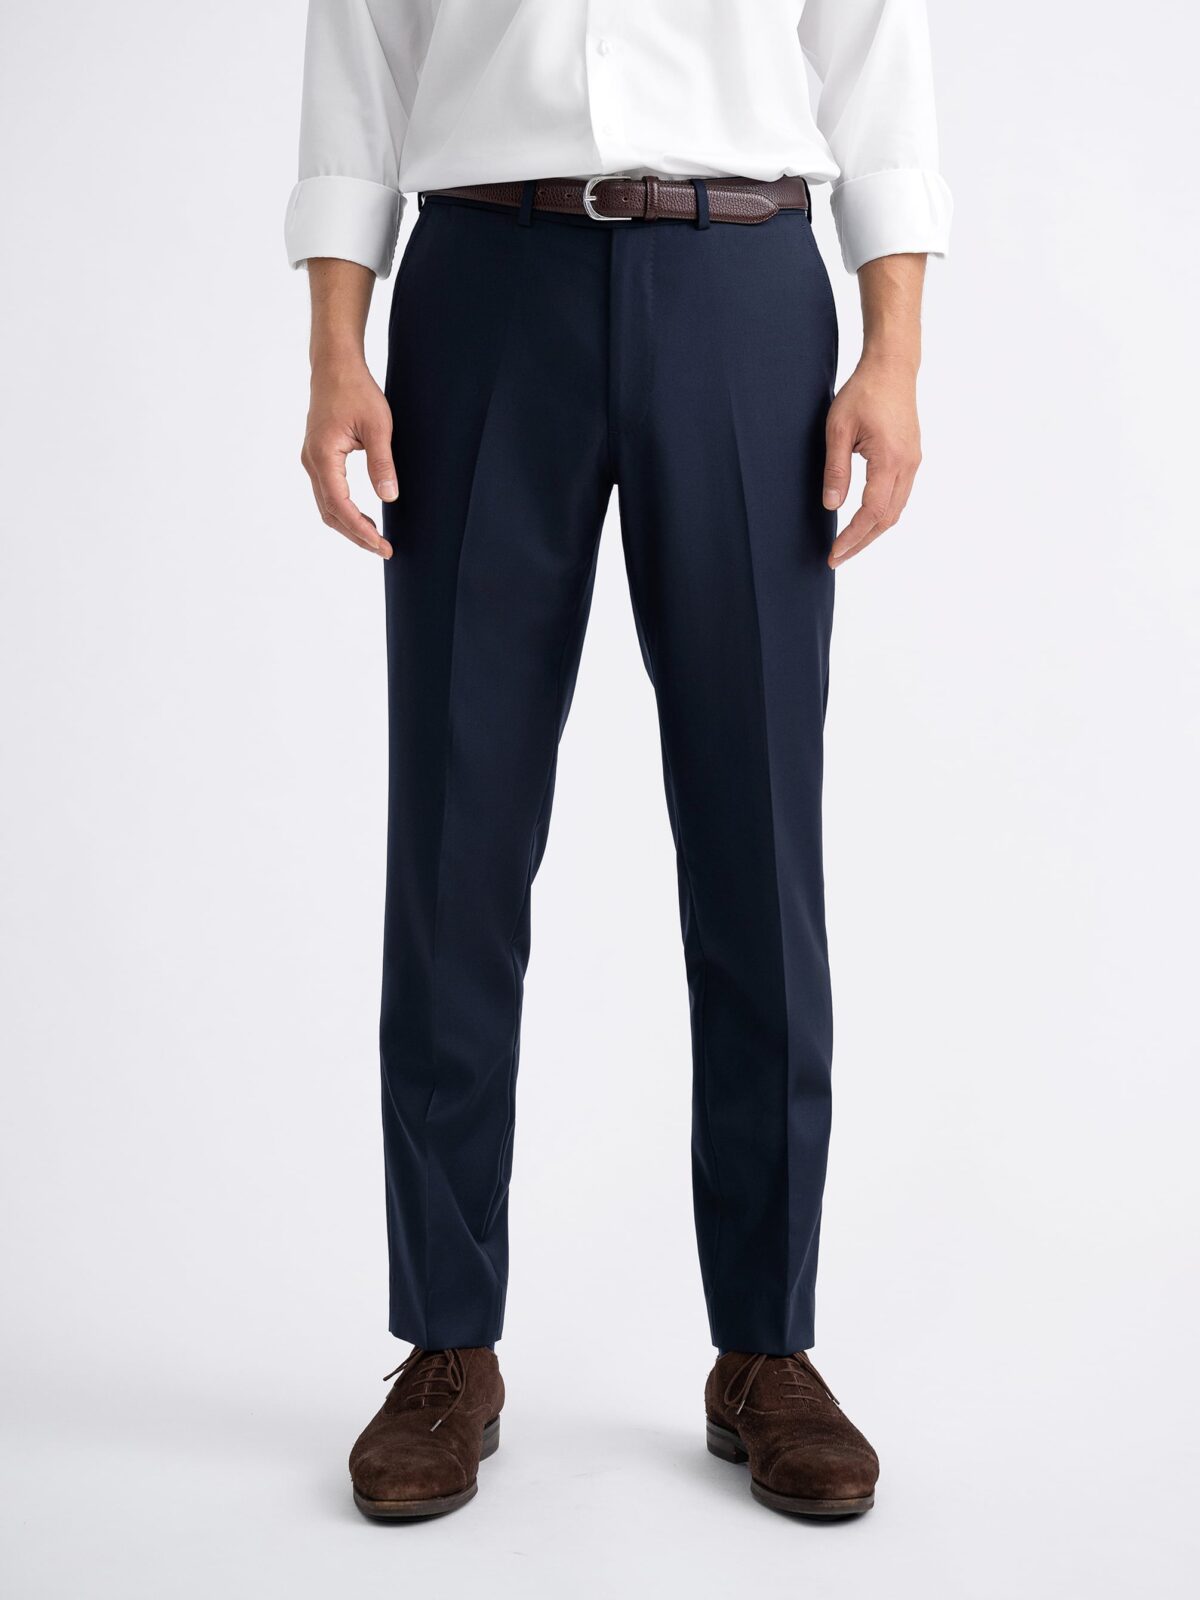 CenturyX Bootcut Yoga Pants for Women Stretchy Work Business Slacks Dress  Pants Casual Straight Leg Trousers with Pockets Navy Blue M - Walmart.com